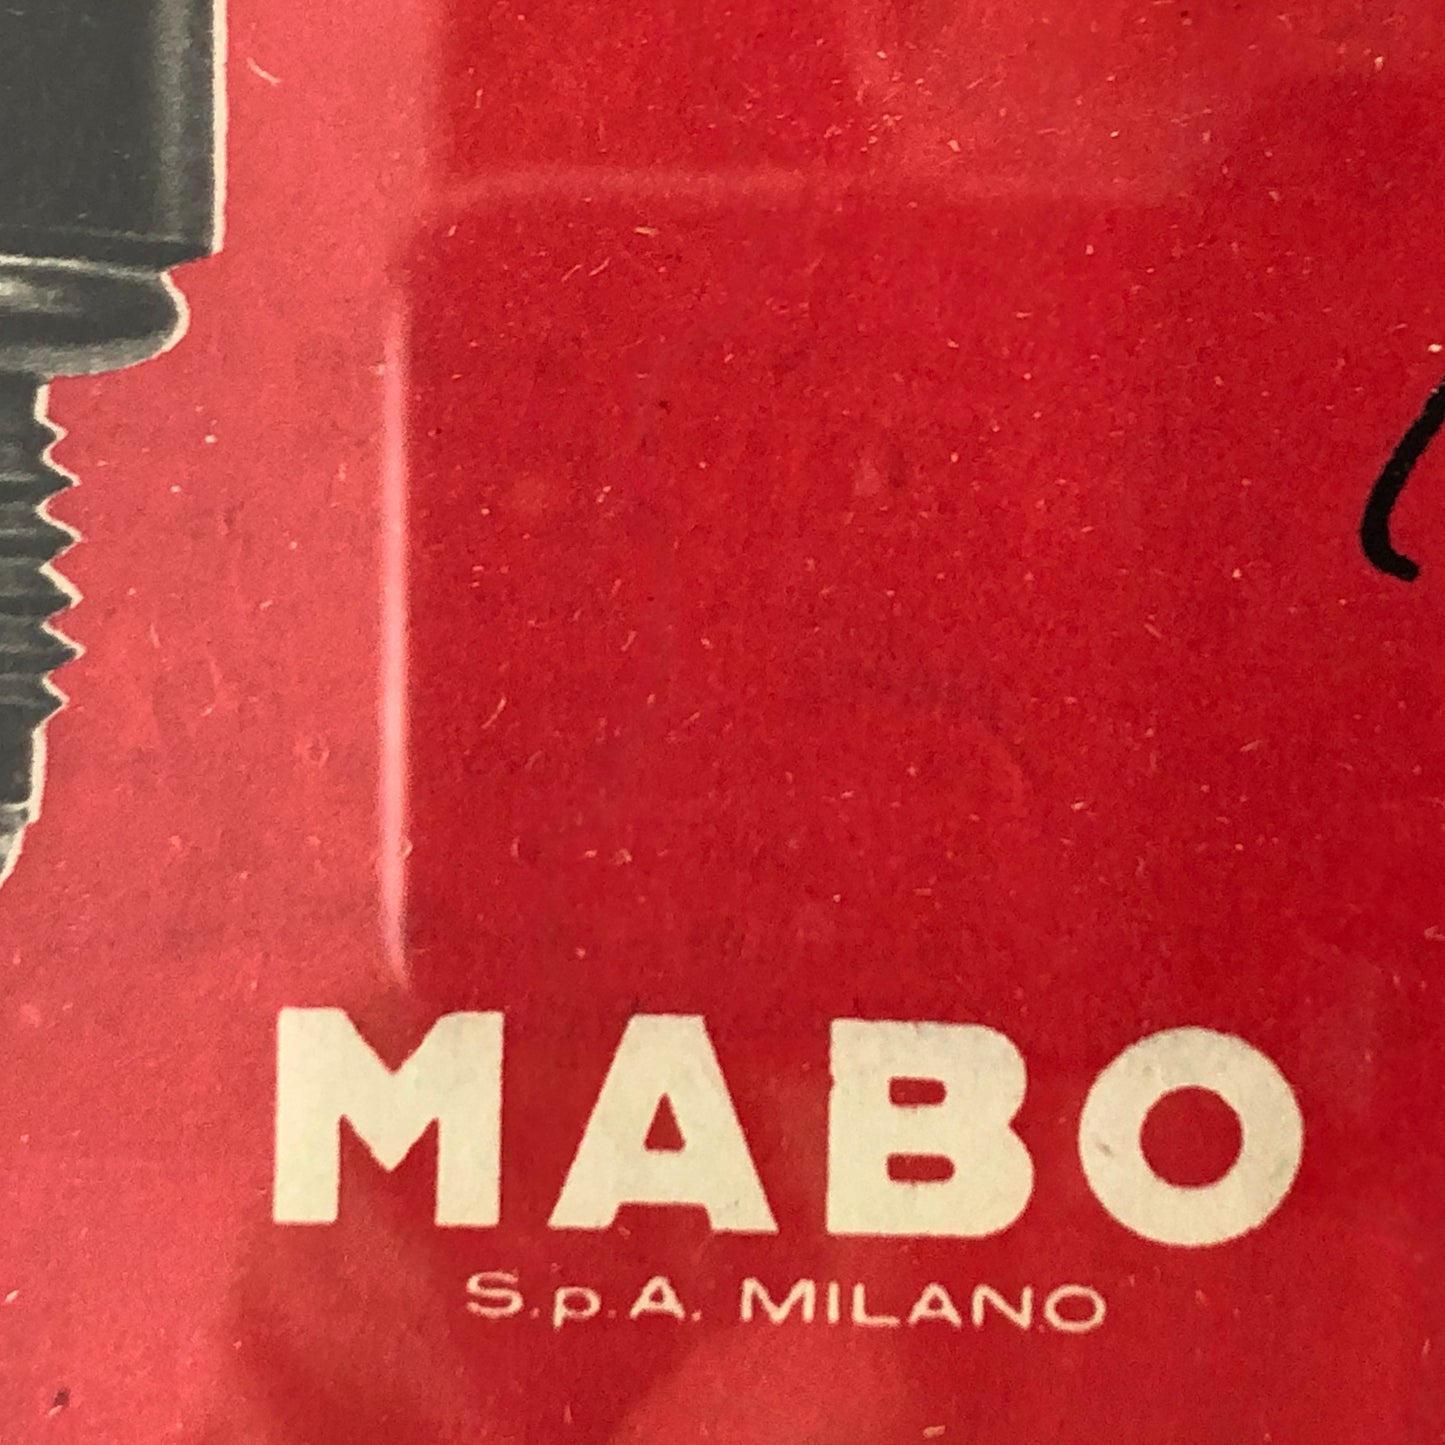 Magneti Marelli, 1959 Advertising Magneti Marelli Spark Plug for FIAT, Alfa Romeo and Lancia